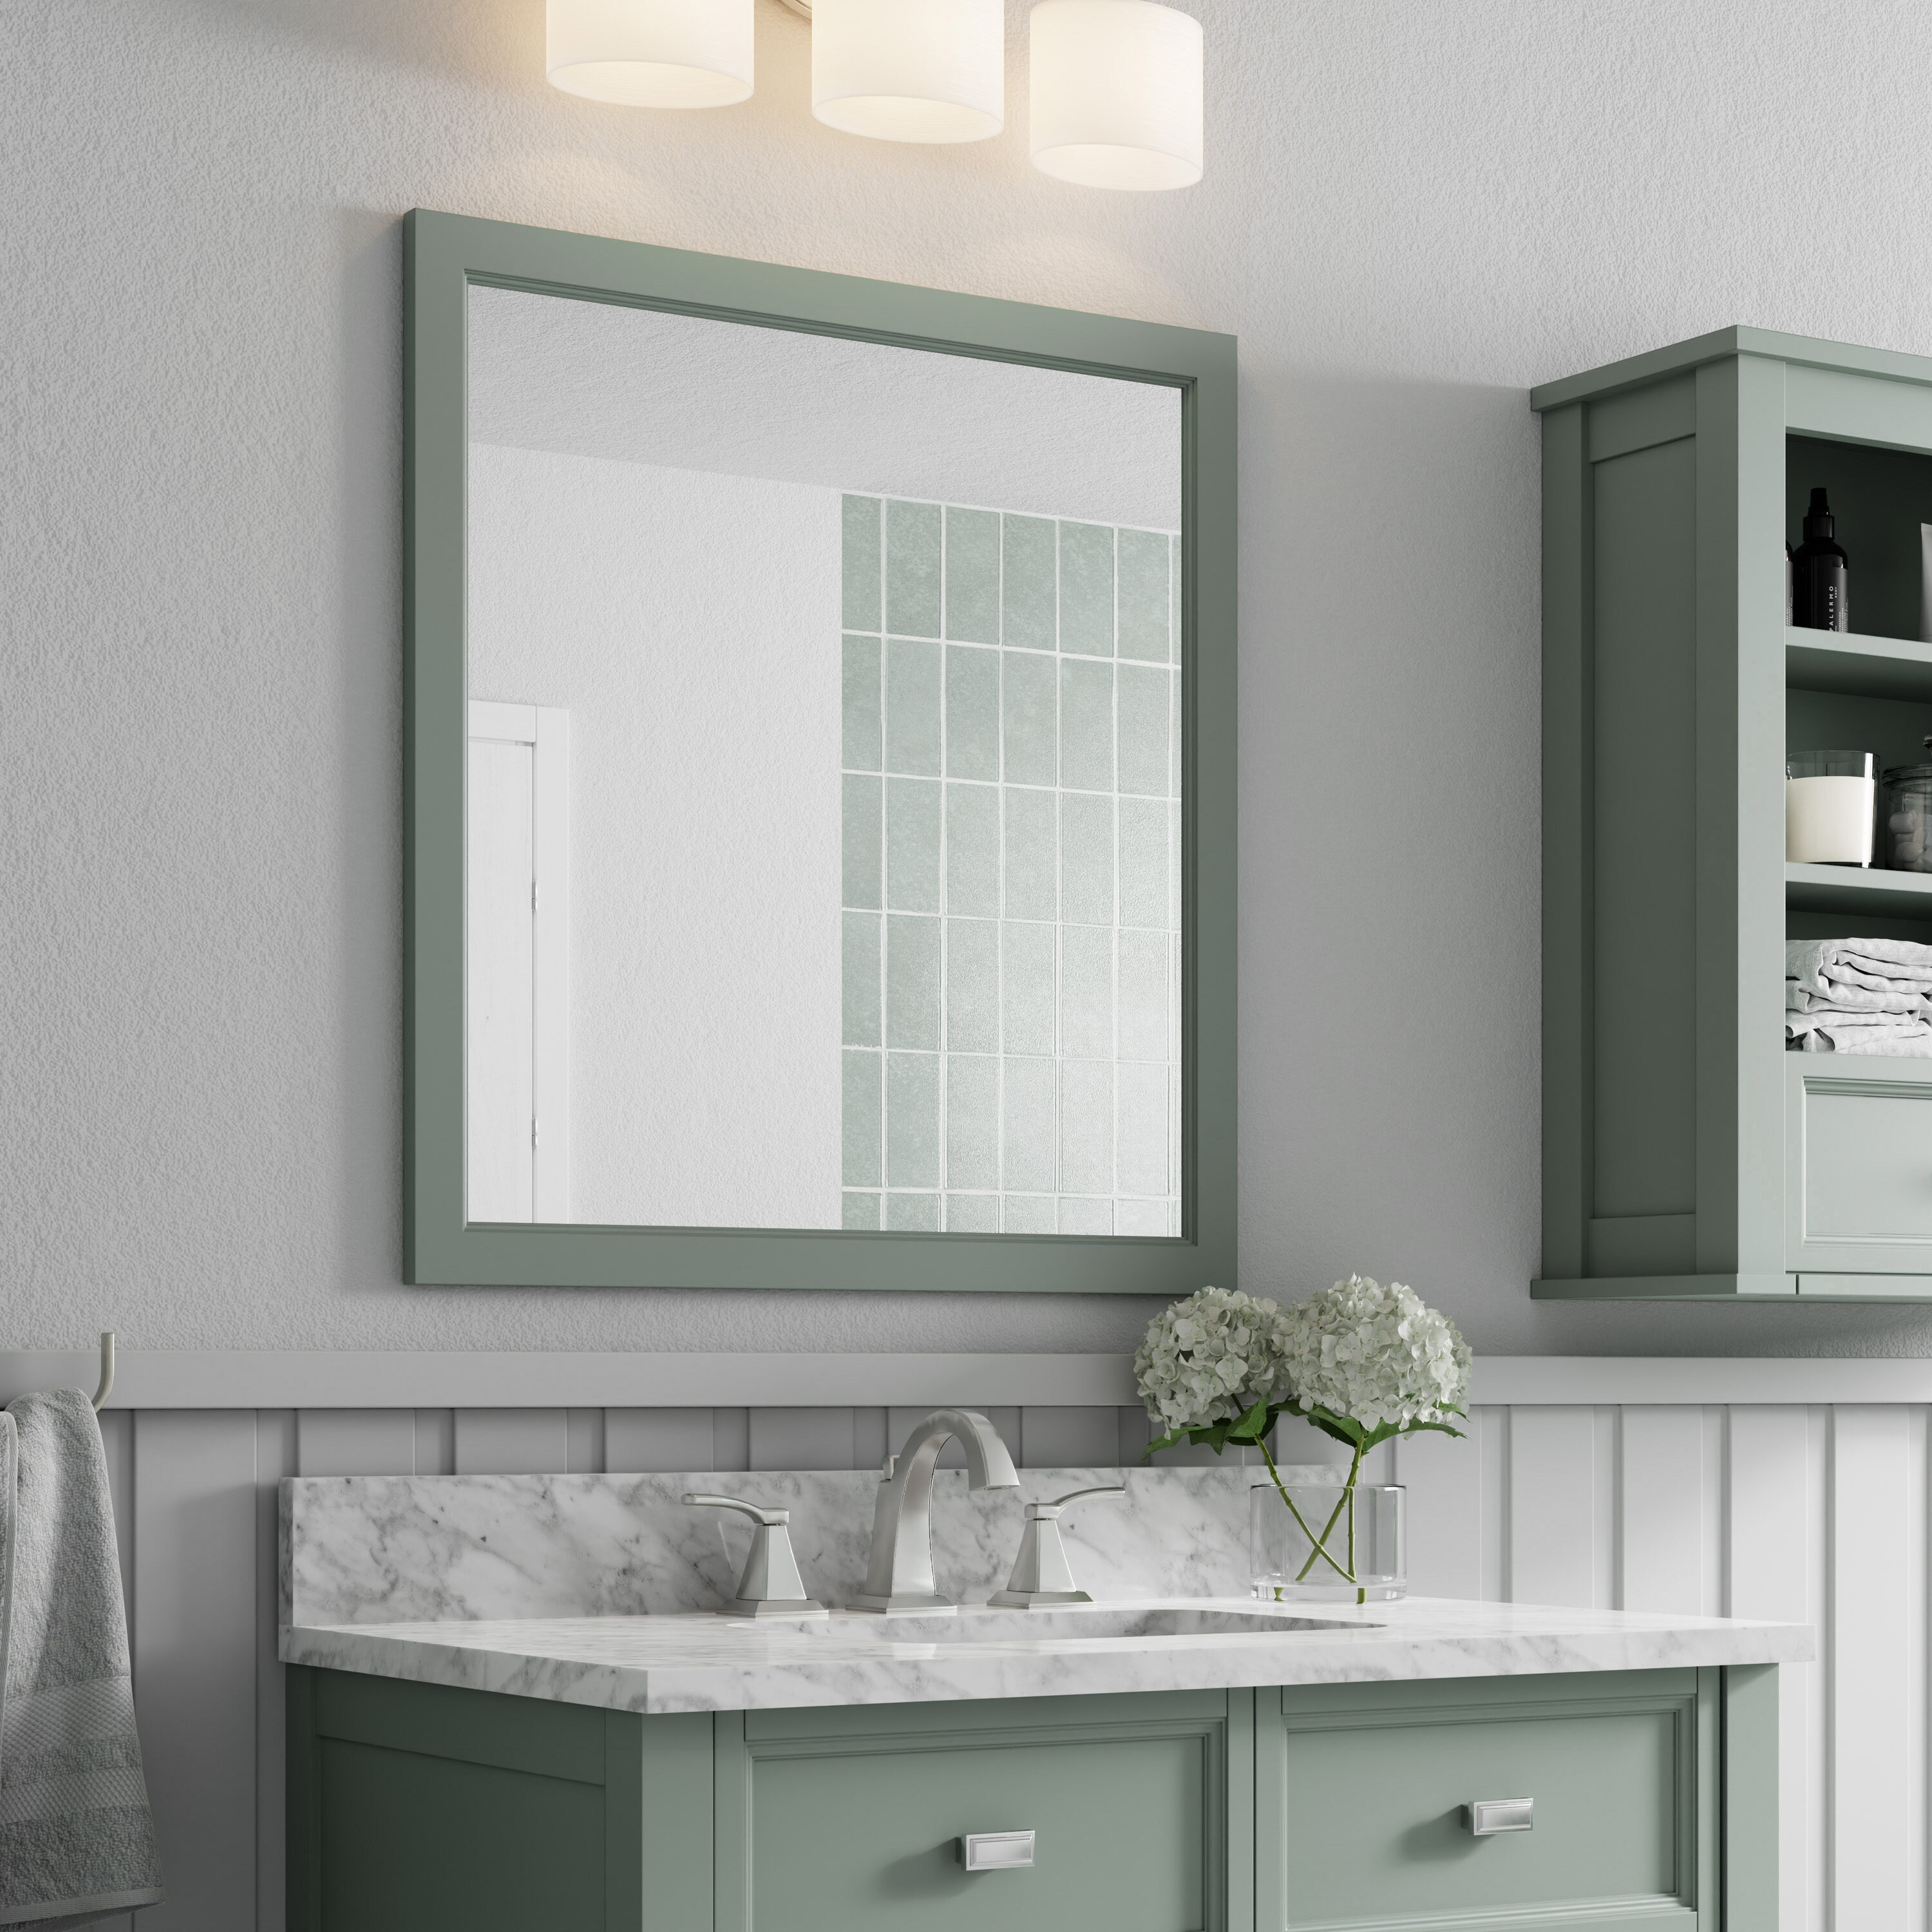 allen + roth Brinkhaven 20-in x 28-in White Framed Bathroom Vanity